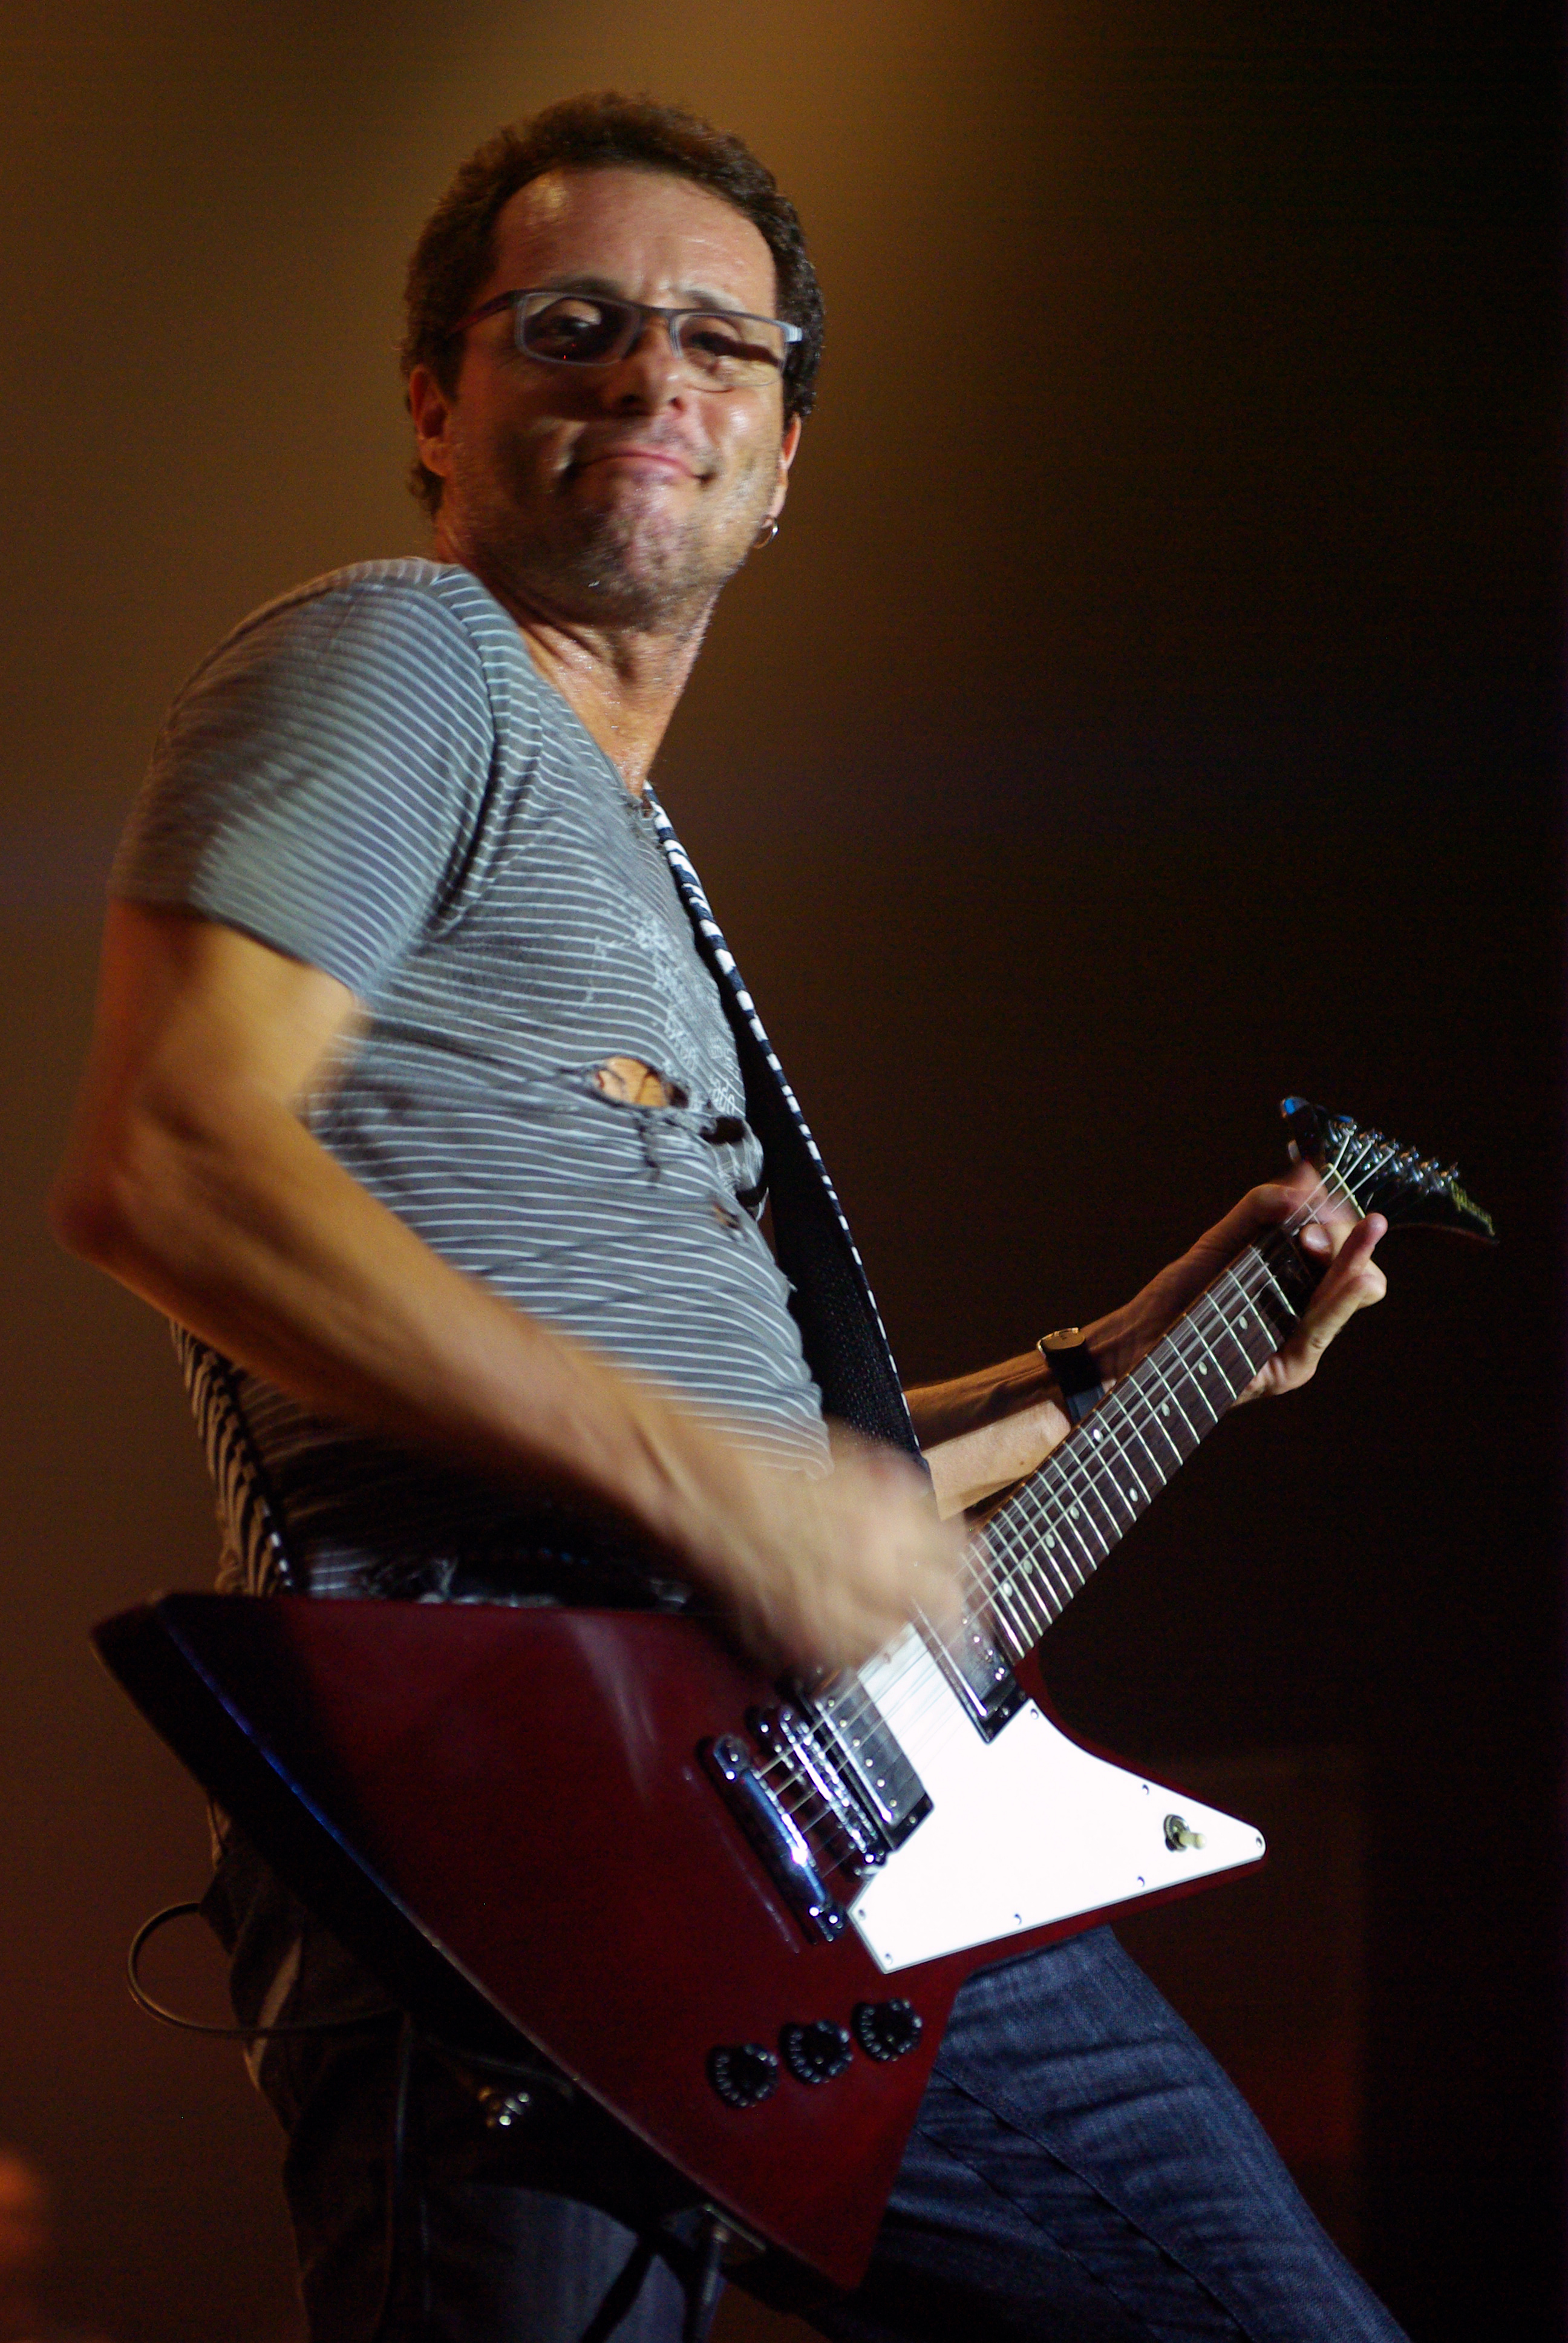 Tony Bellotto in 2009 during a Titãs & [[Os Paralamas do Sucesso]] show in [[Recife]], Pernambuco, Brazil.